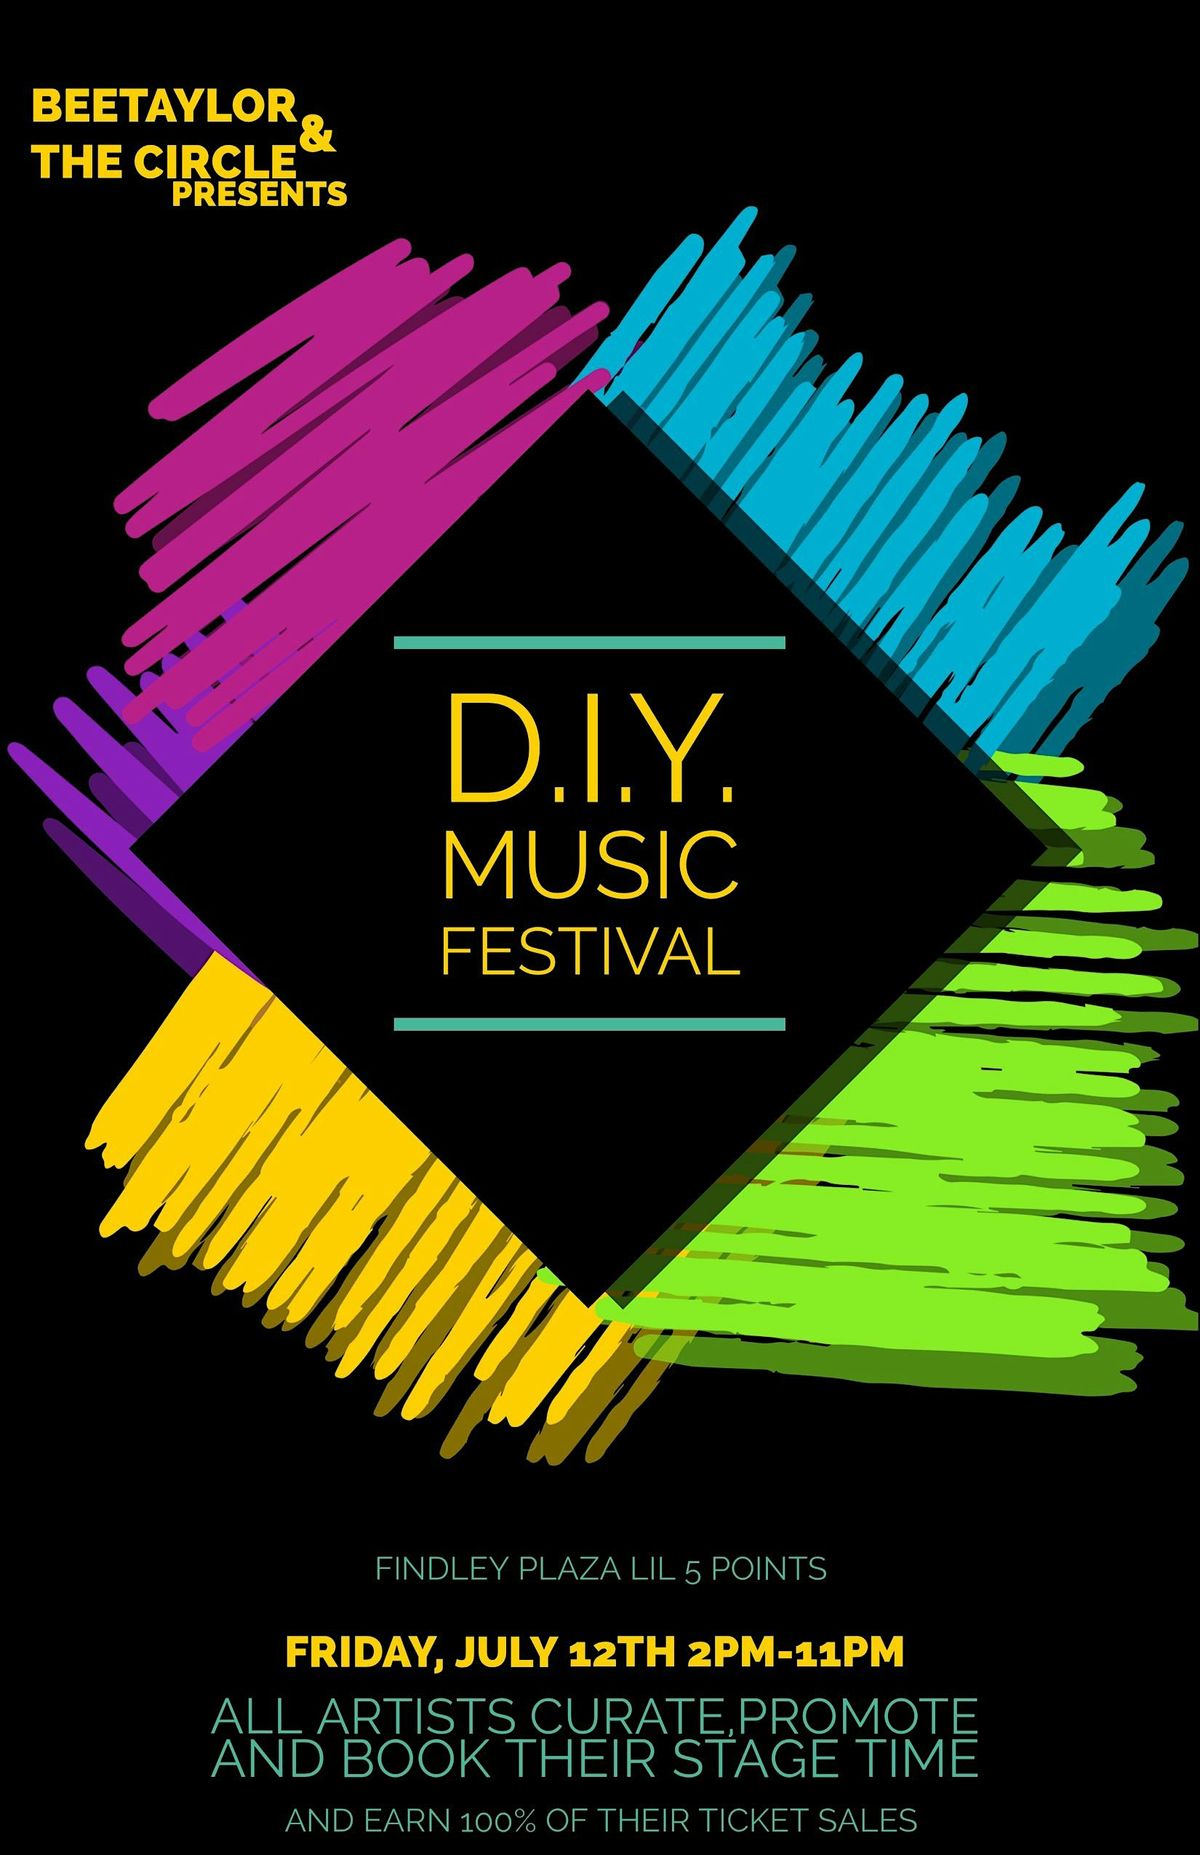 D.I.Y. Music Festival